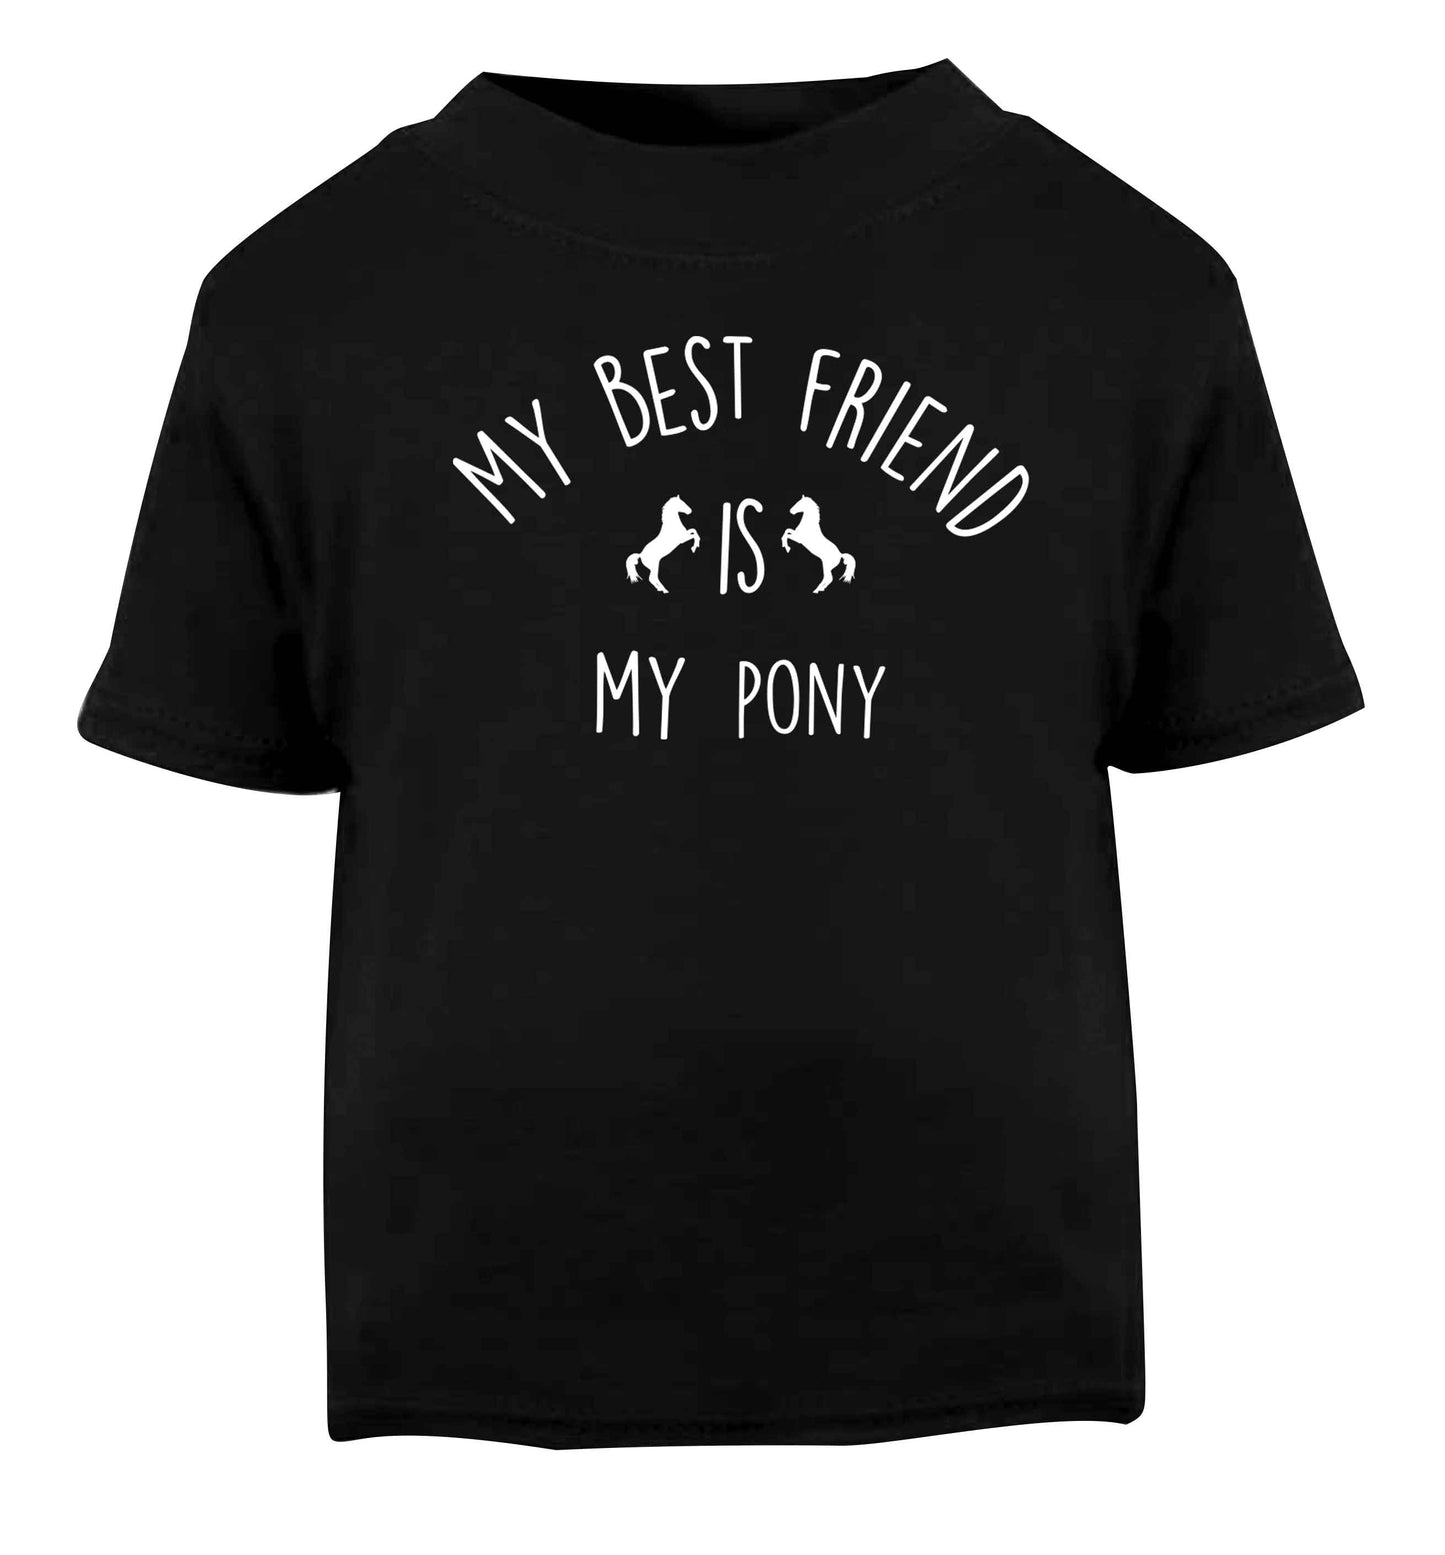 My best friend is my pony Black baby toddler Tshirt 2 years